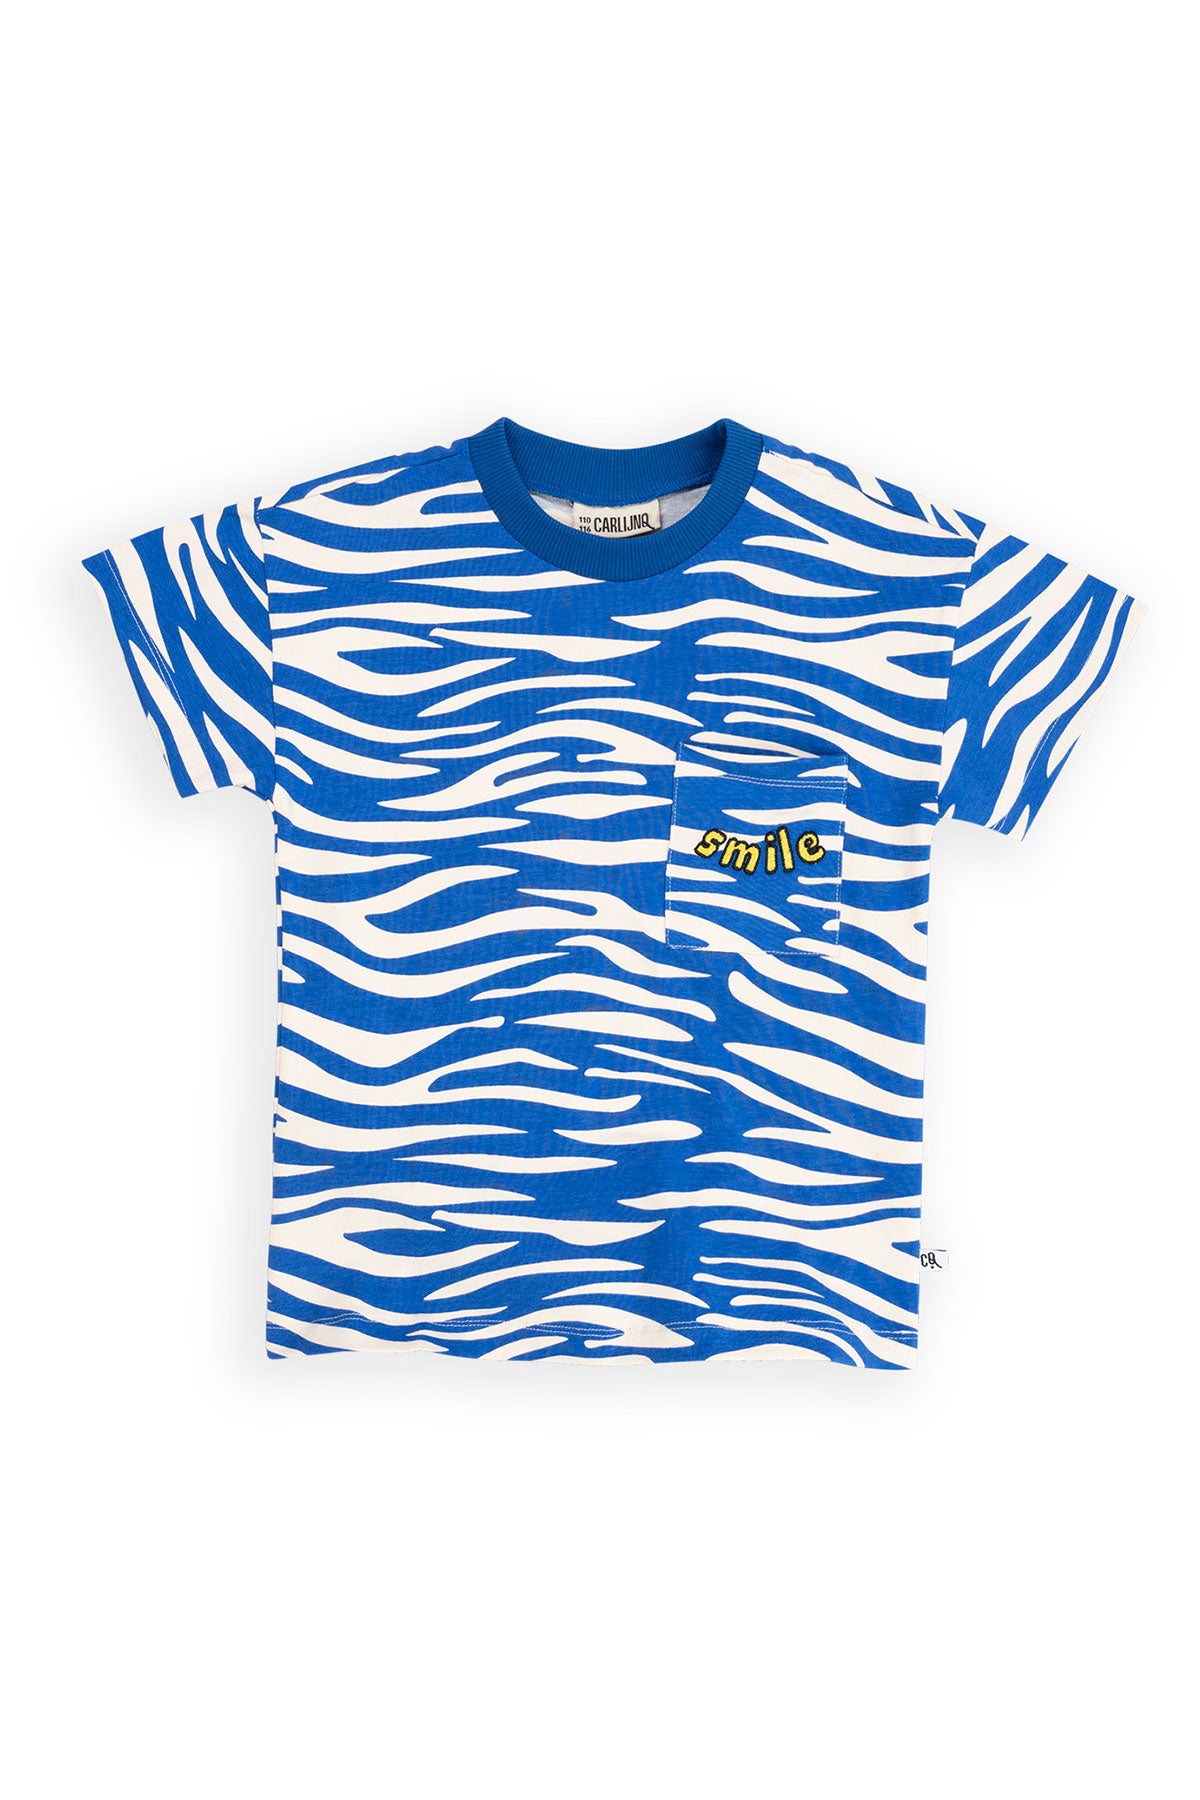 Zebra - Crew neck T-shirt wt pocket